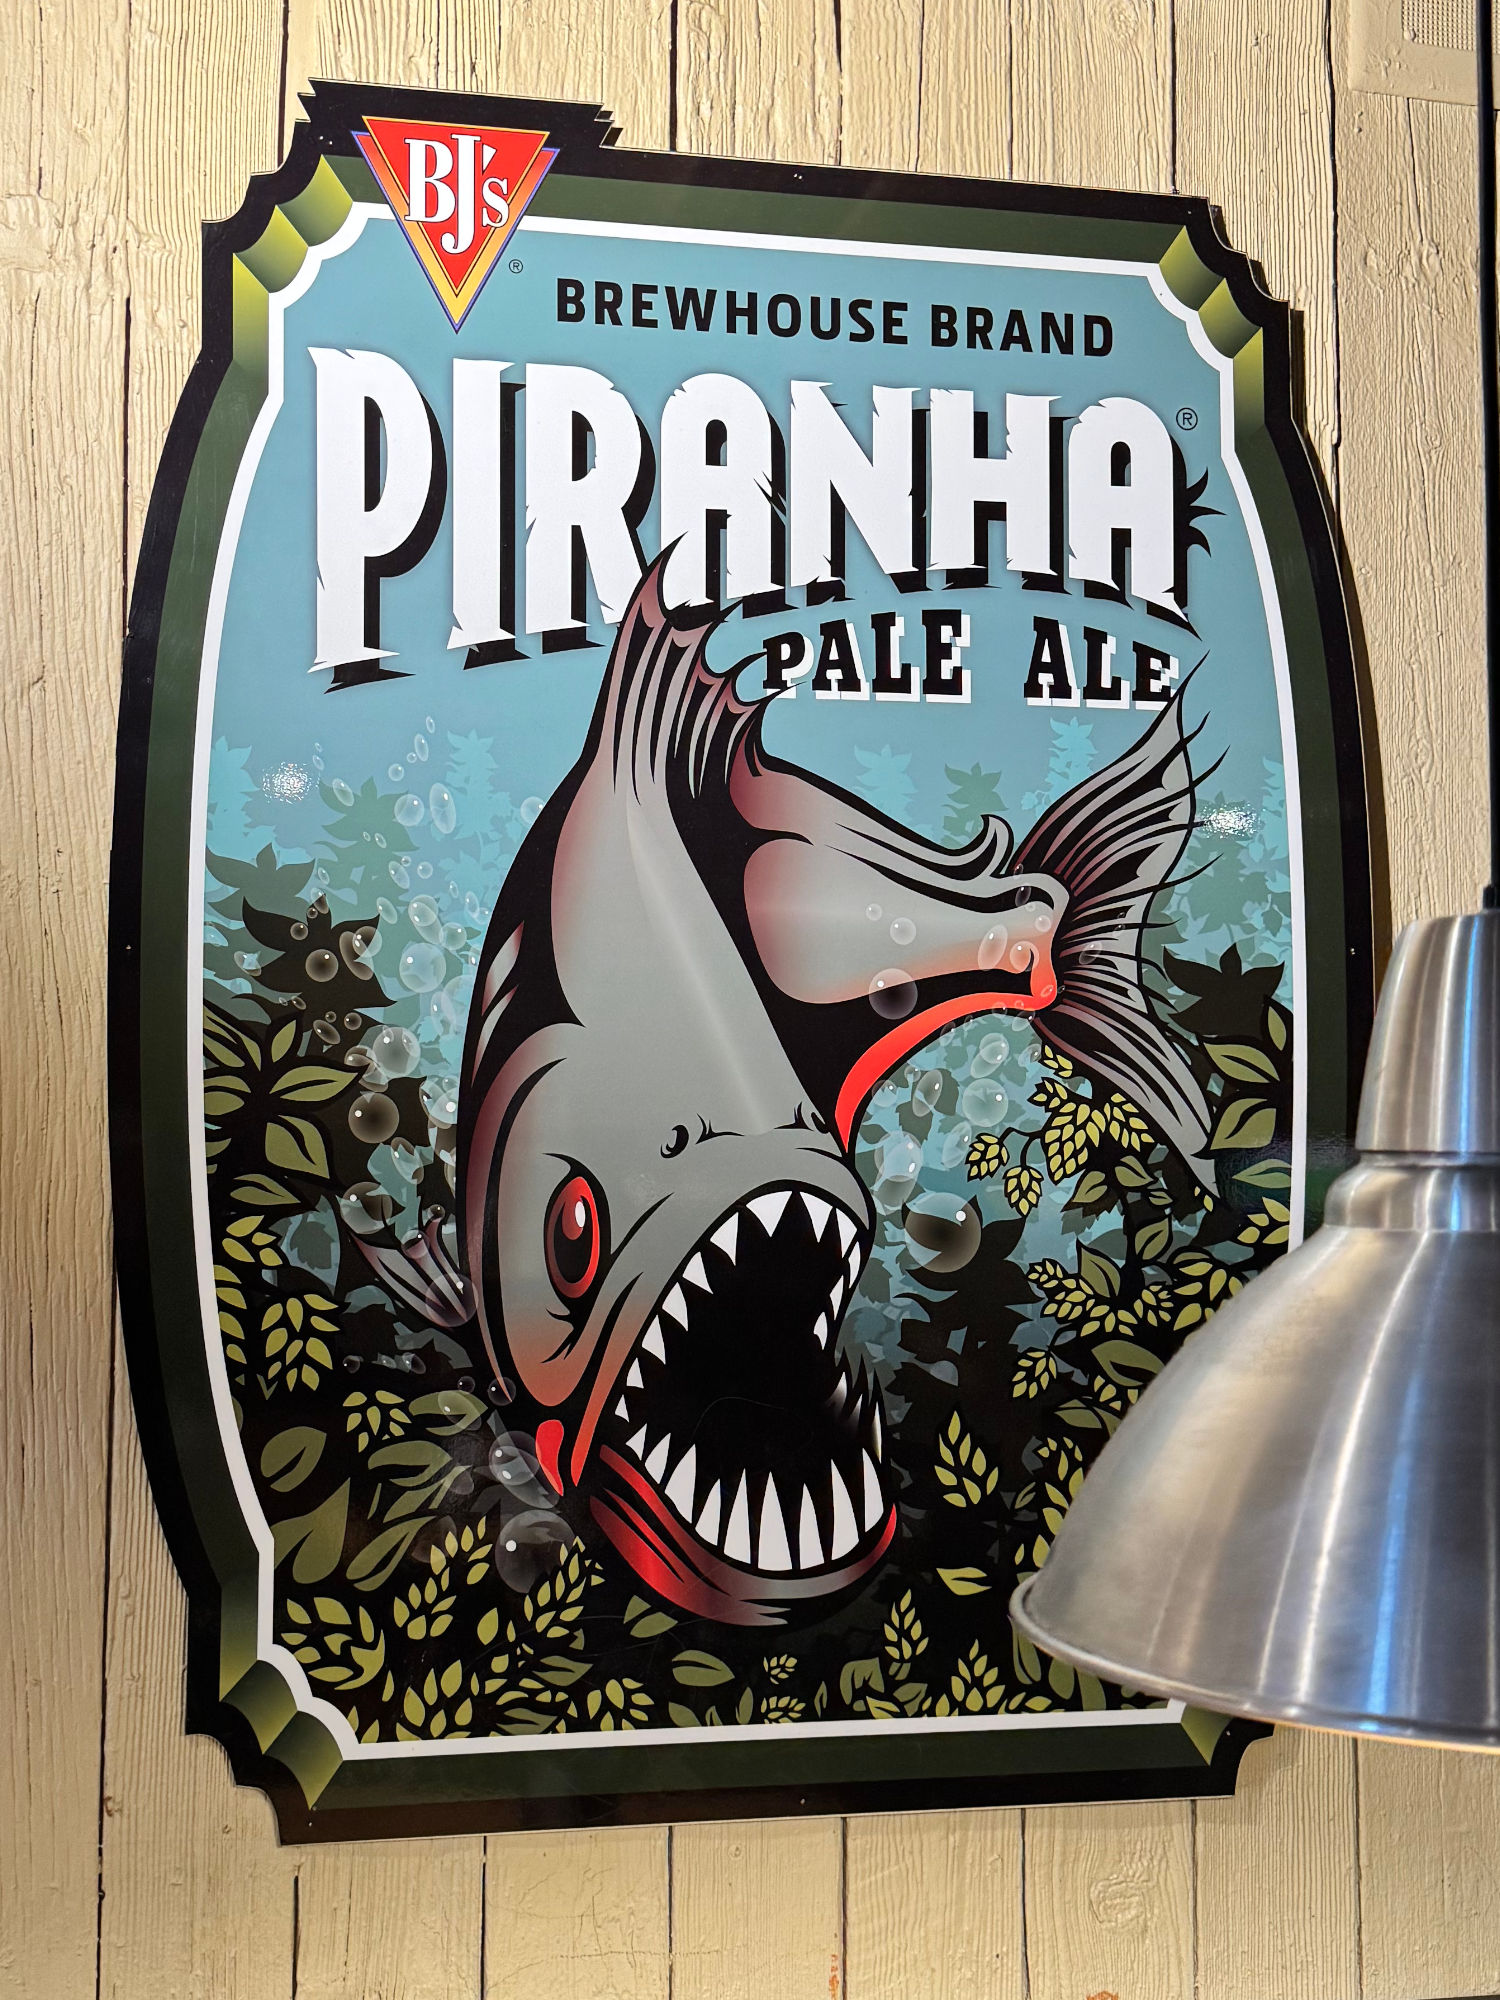 Bj's Brewhouse Piranha Pale Ale